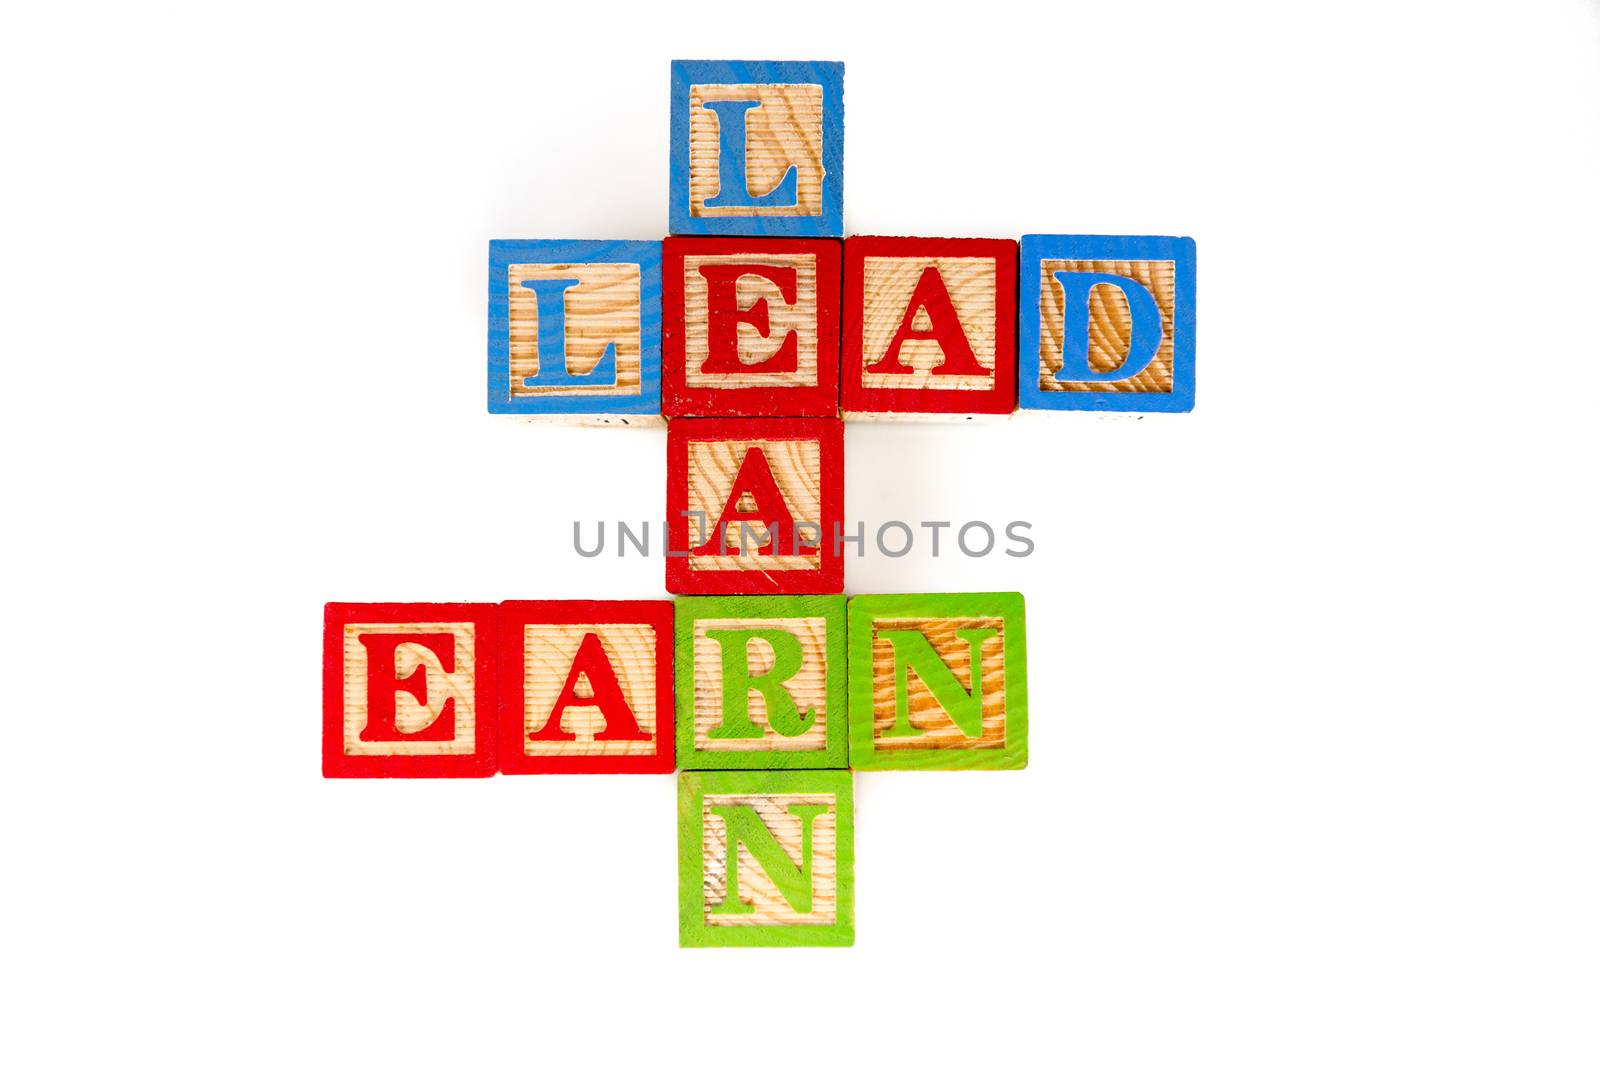 Learn, Lead and Earn